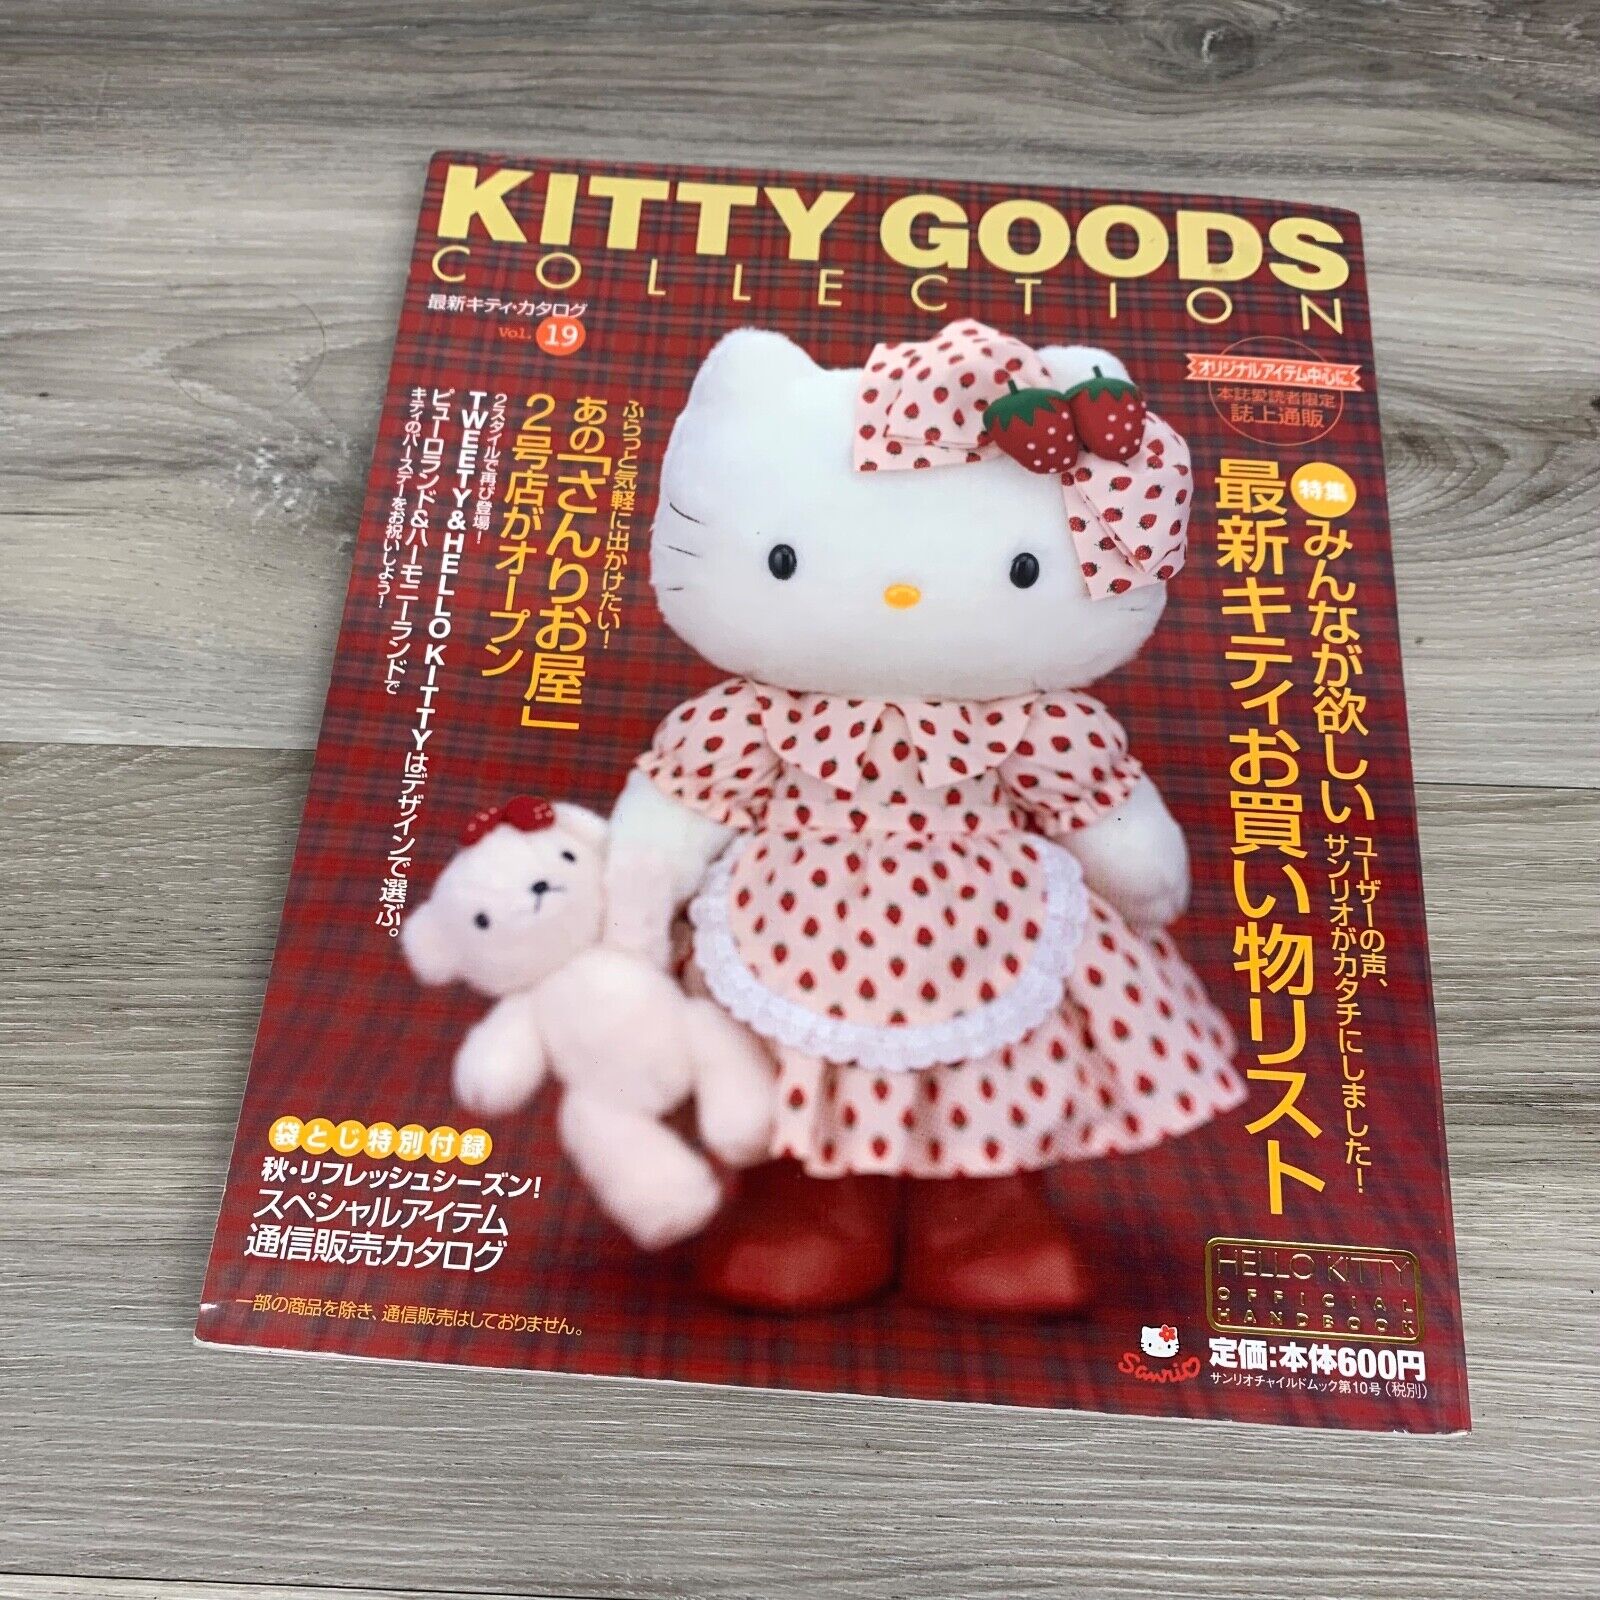 Sanrio Hello Kitty Goods Collection Magazine #19 2002 Vintage Catalog